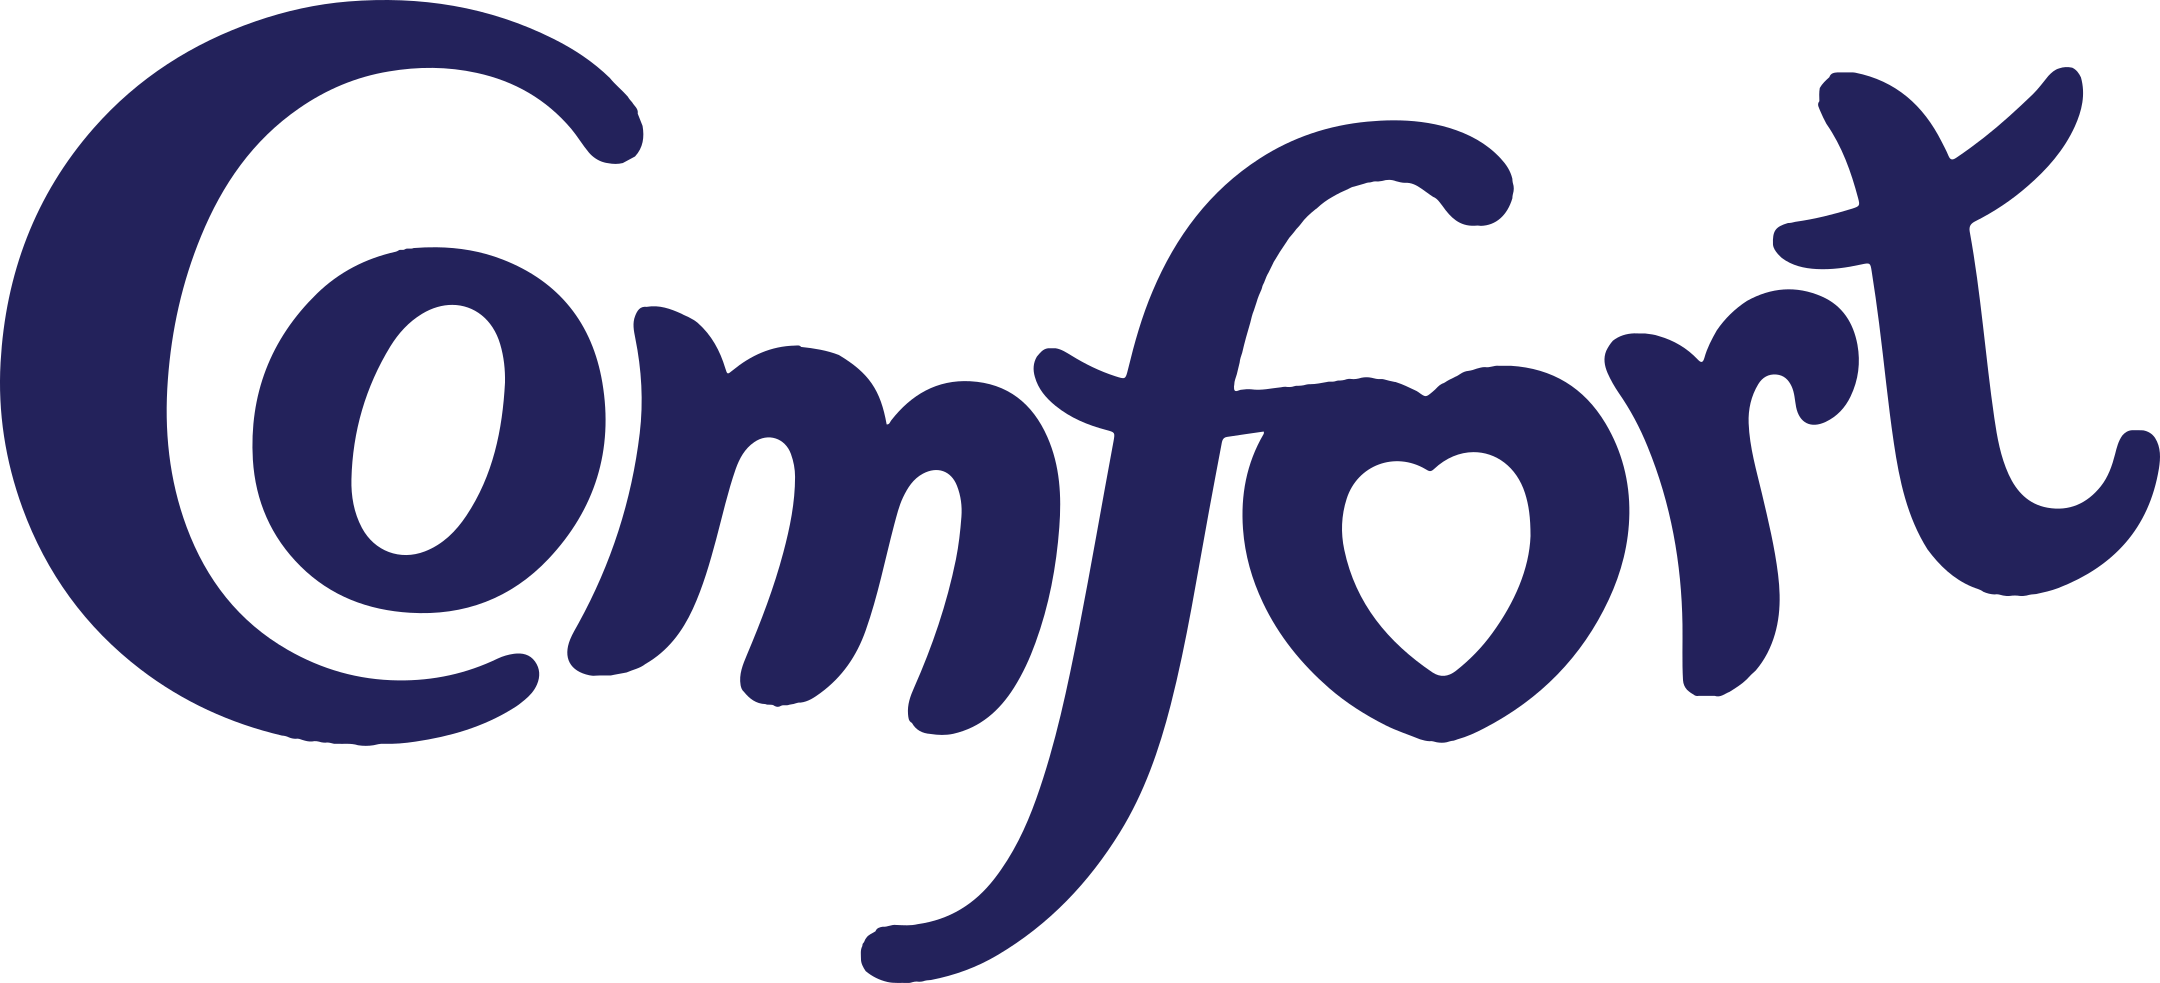 comfort logo 1 - Comfort Logo